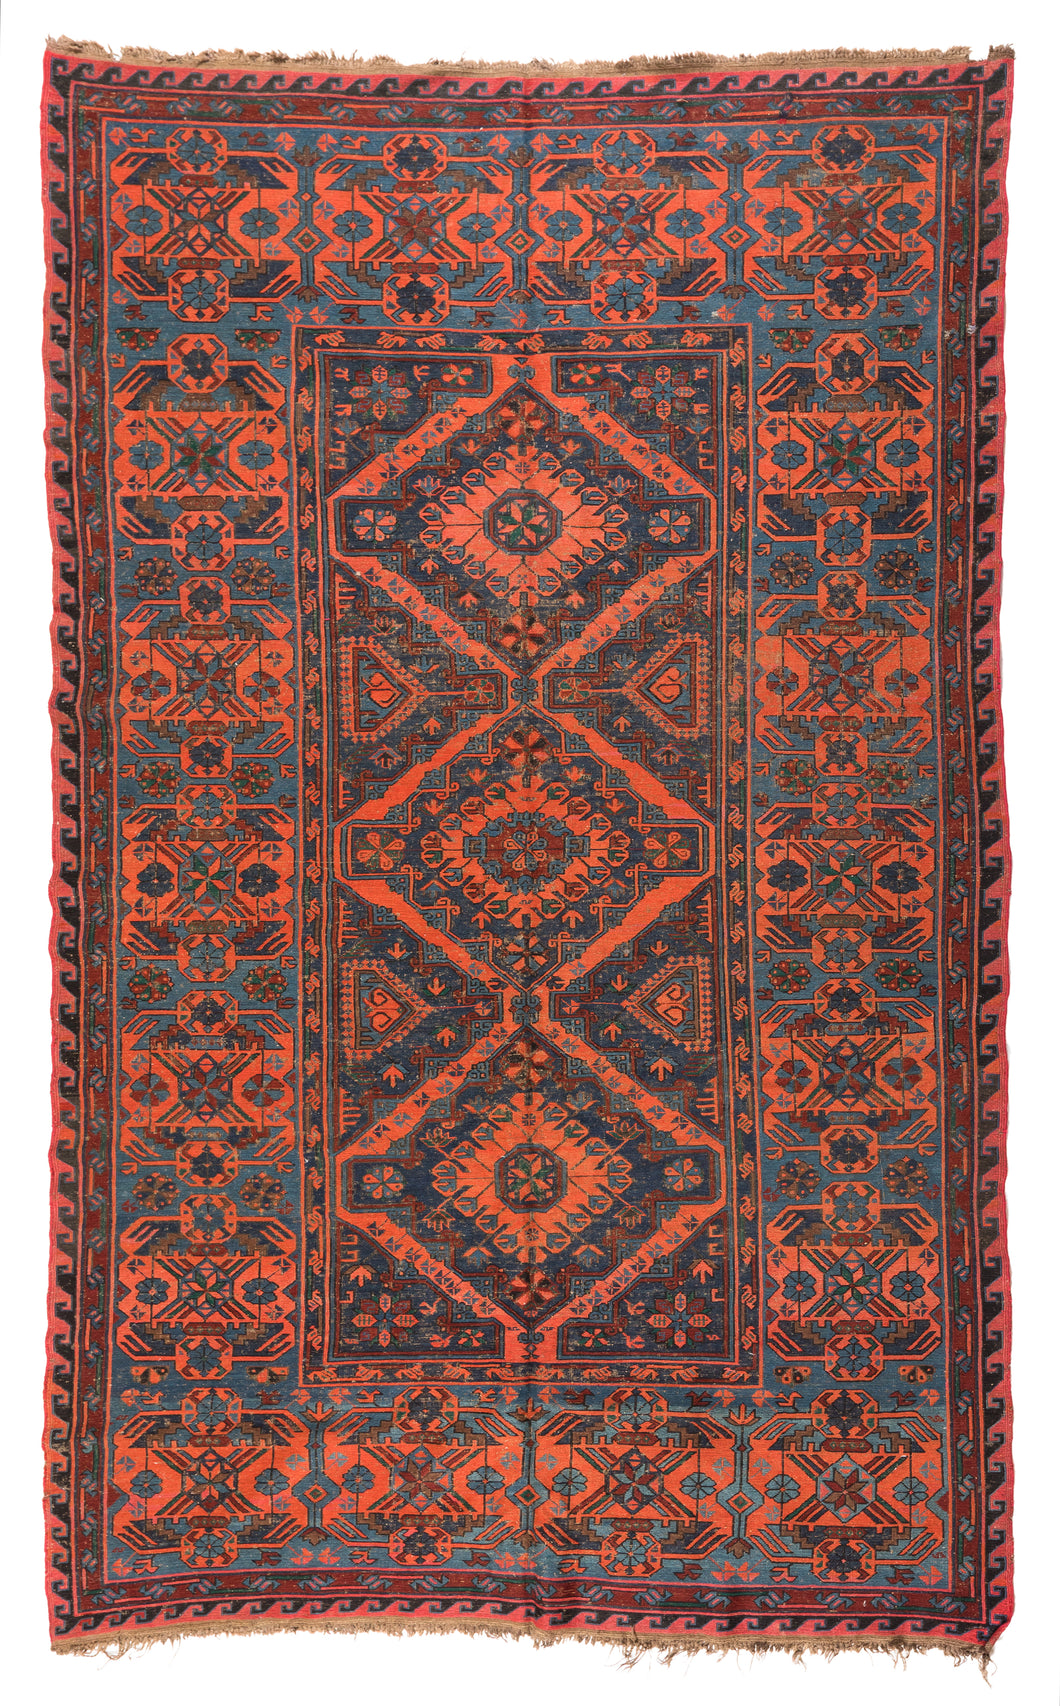 Antique Soumak Carpet